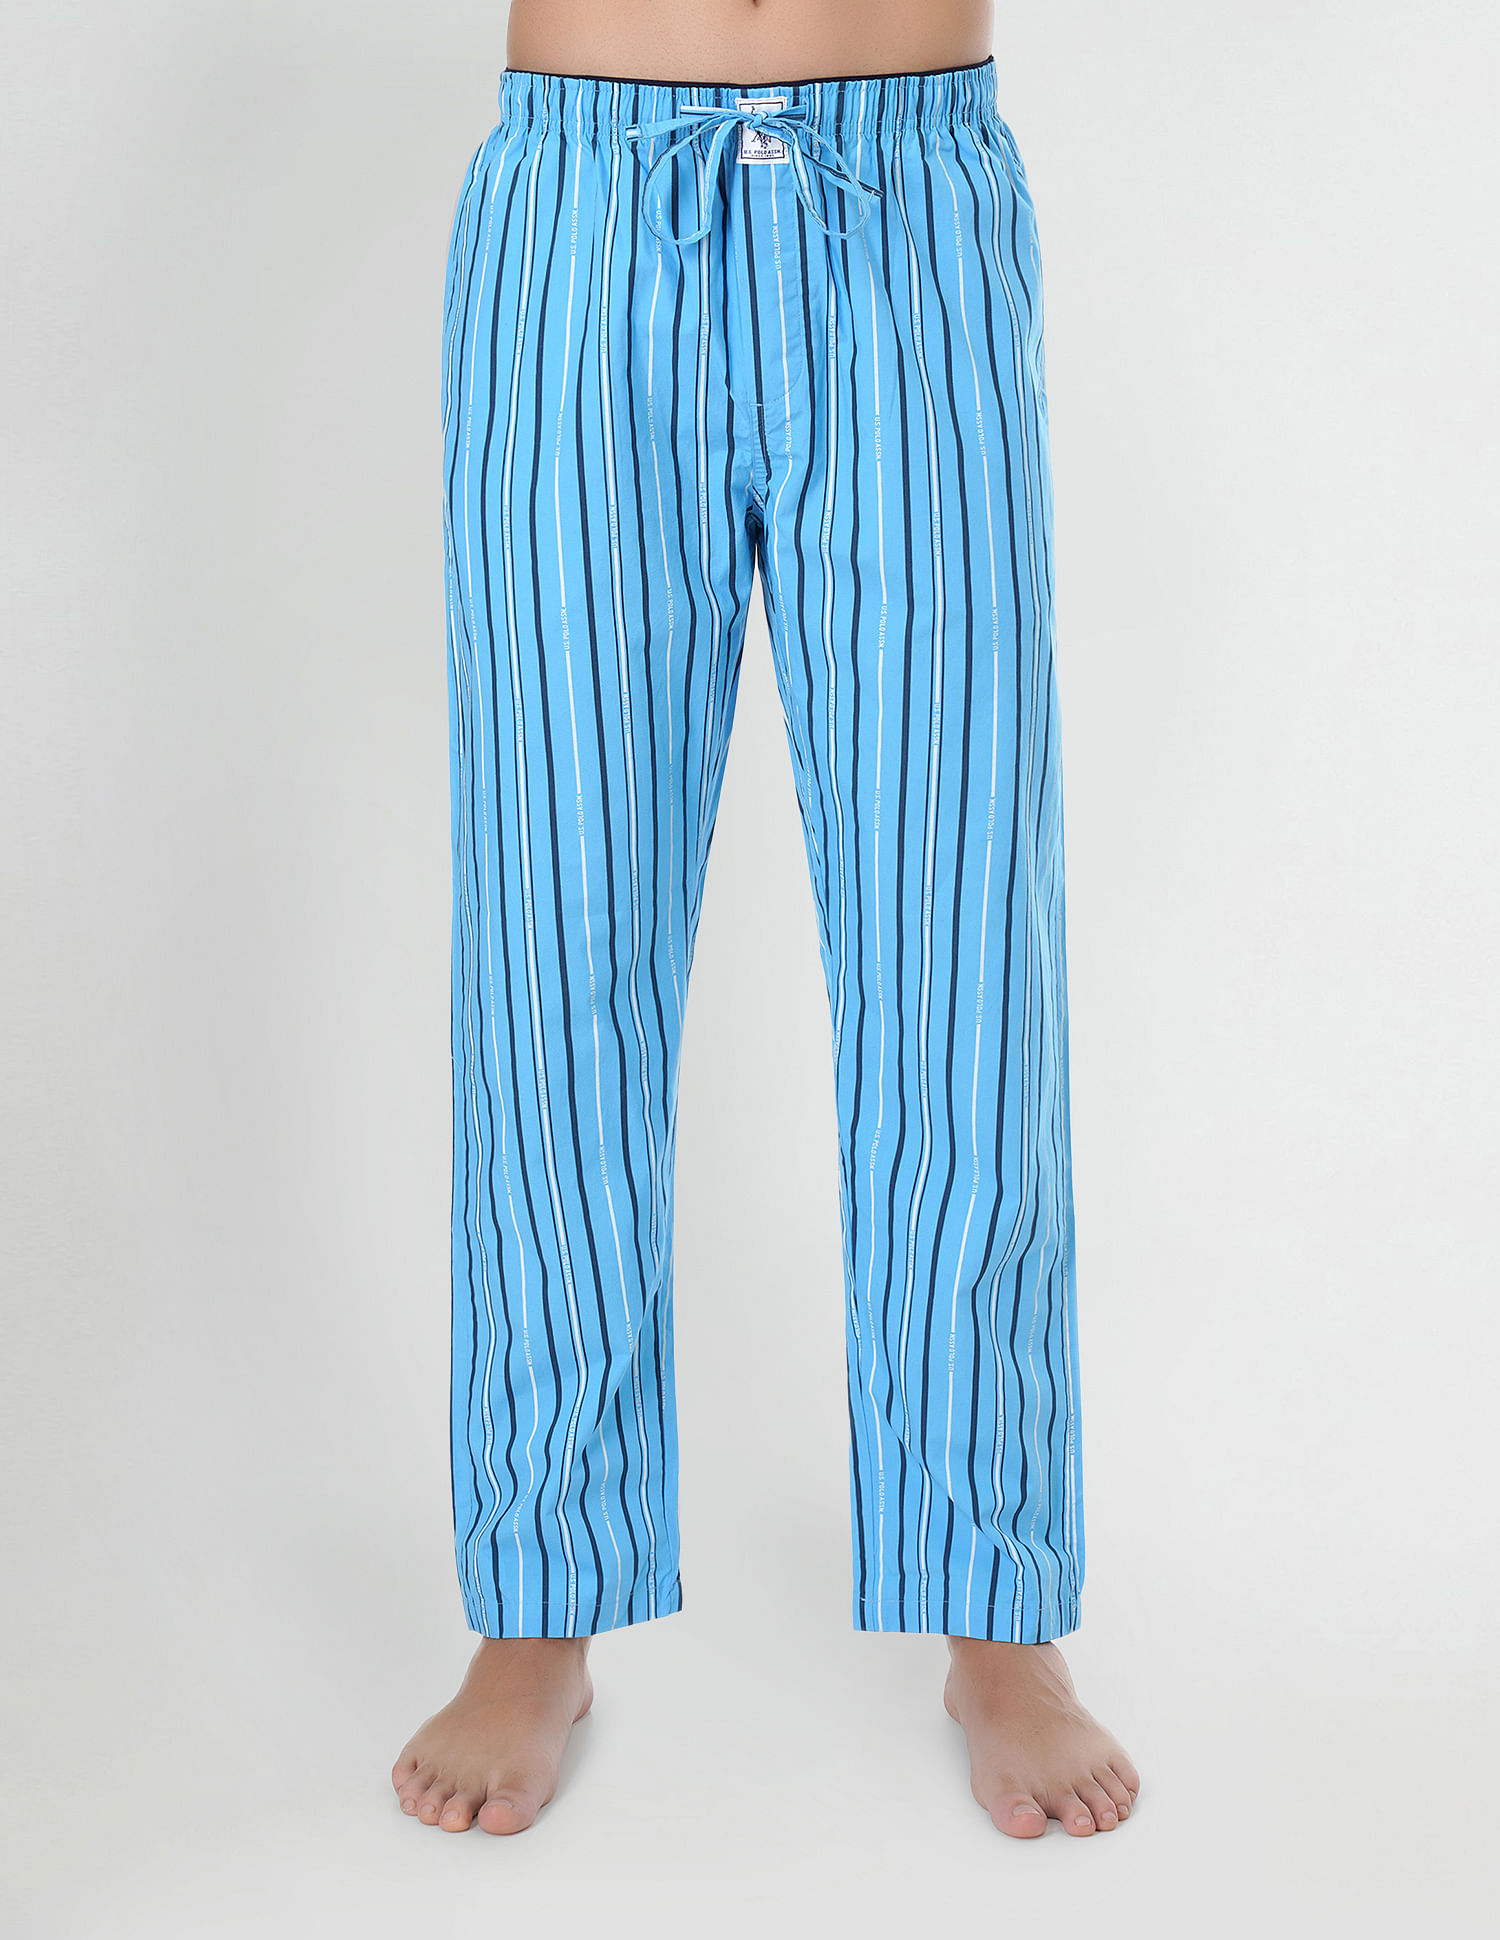 Pyjamas  Lounge Pants WildSkin  Buy Women Nightwear  Sleepwear Pyjama  for Latest 2022 Collection